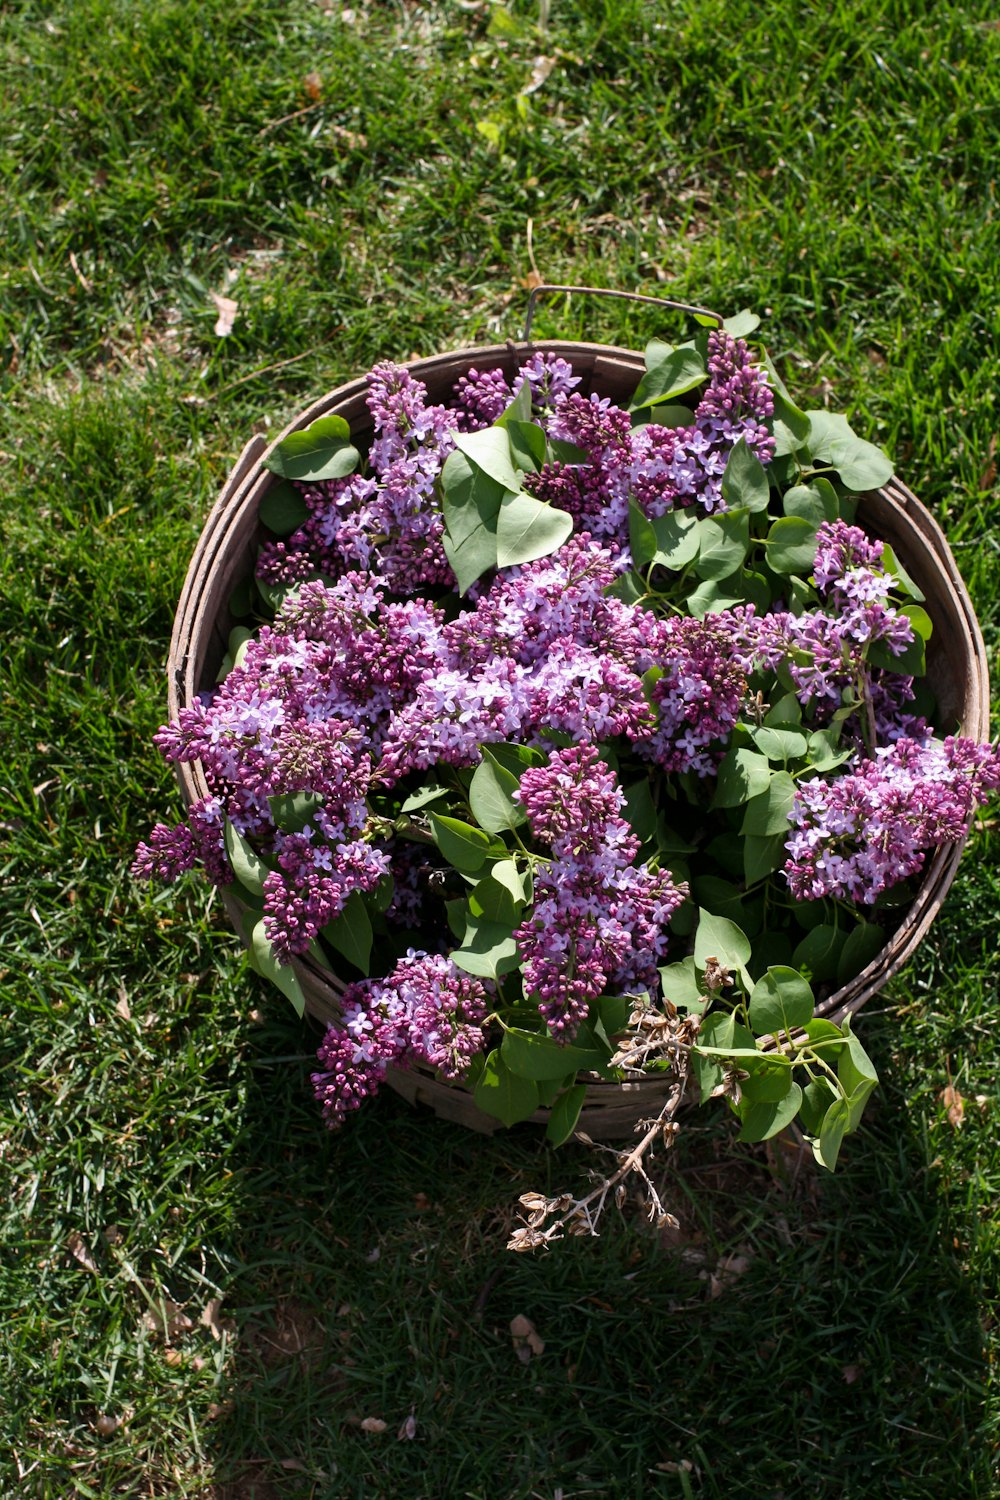 purple flowers in brown woven basket on green grass